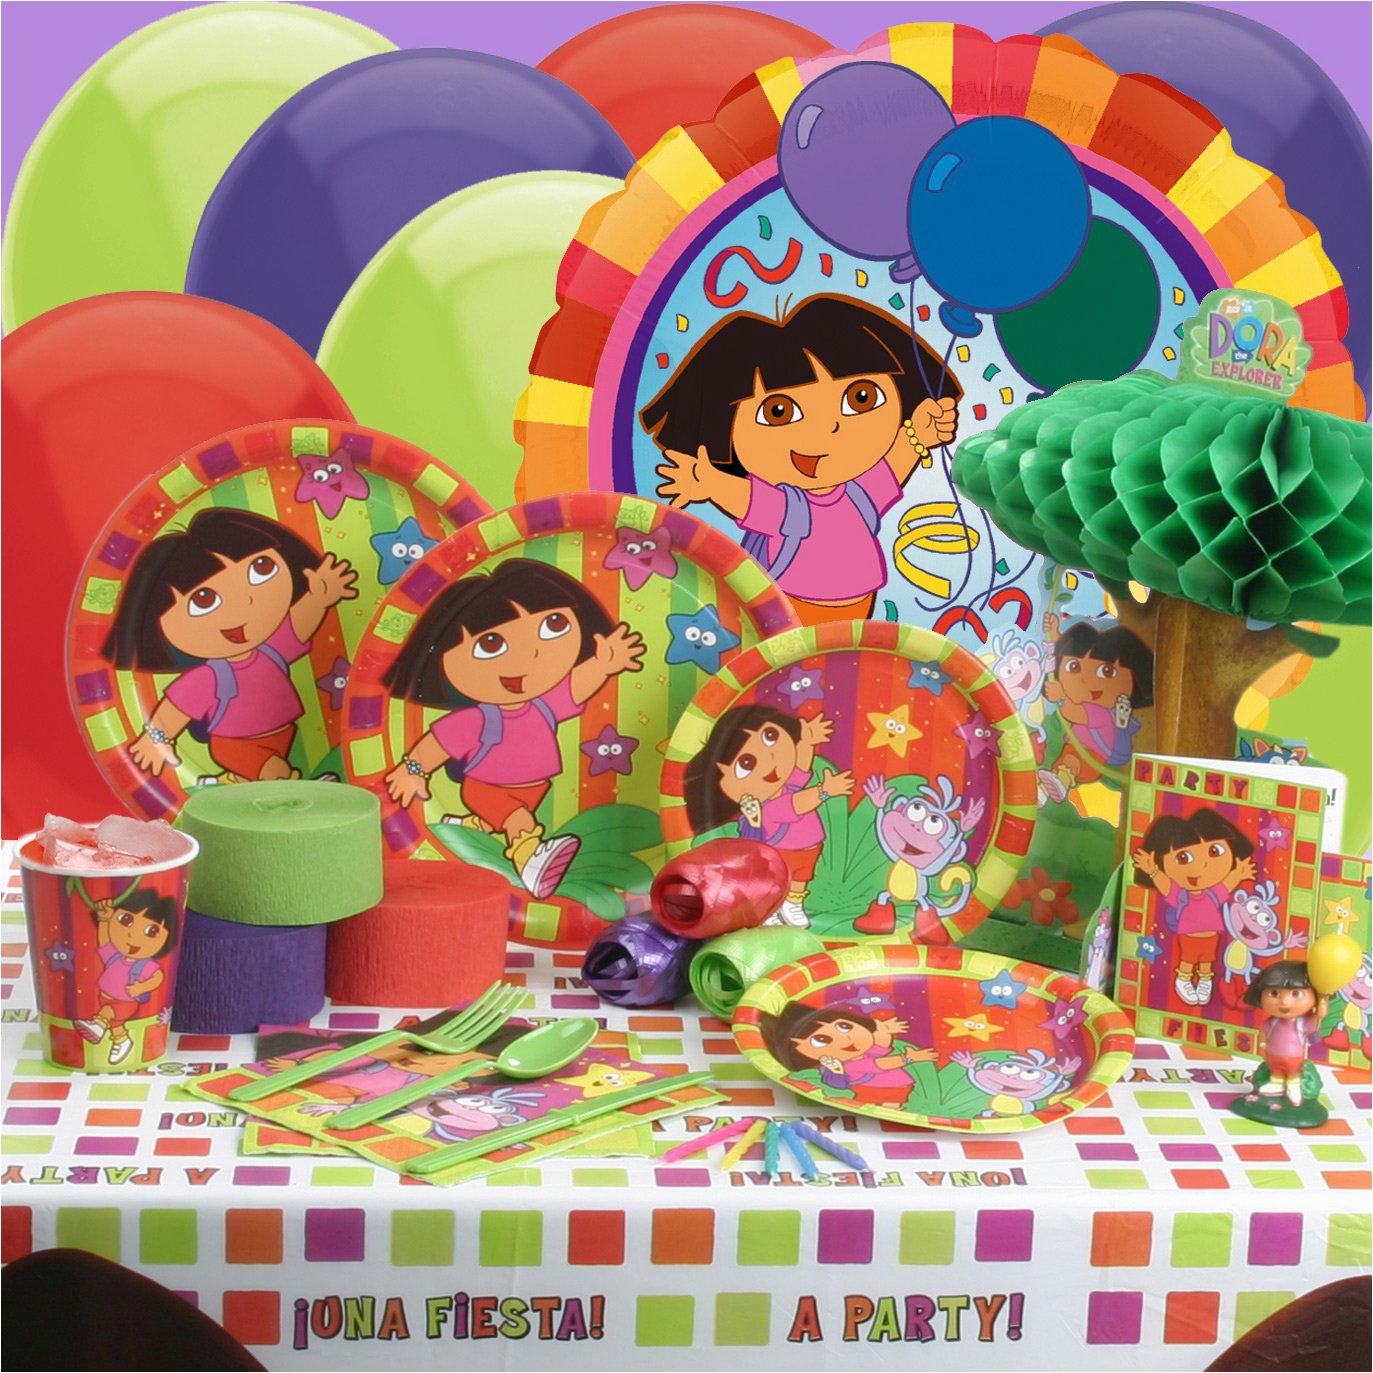 dora birthday party themes for kids